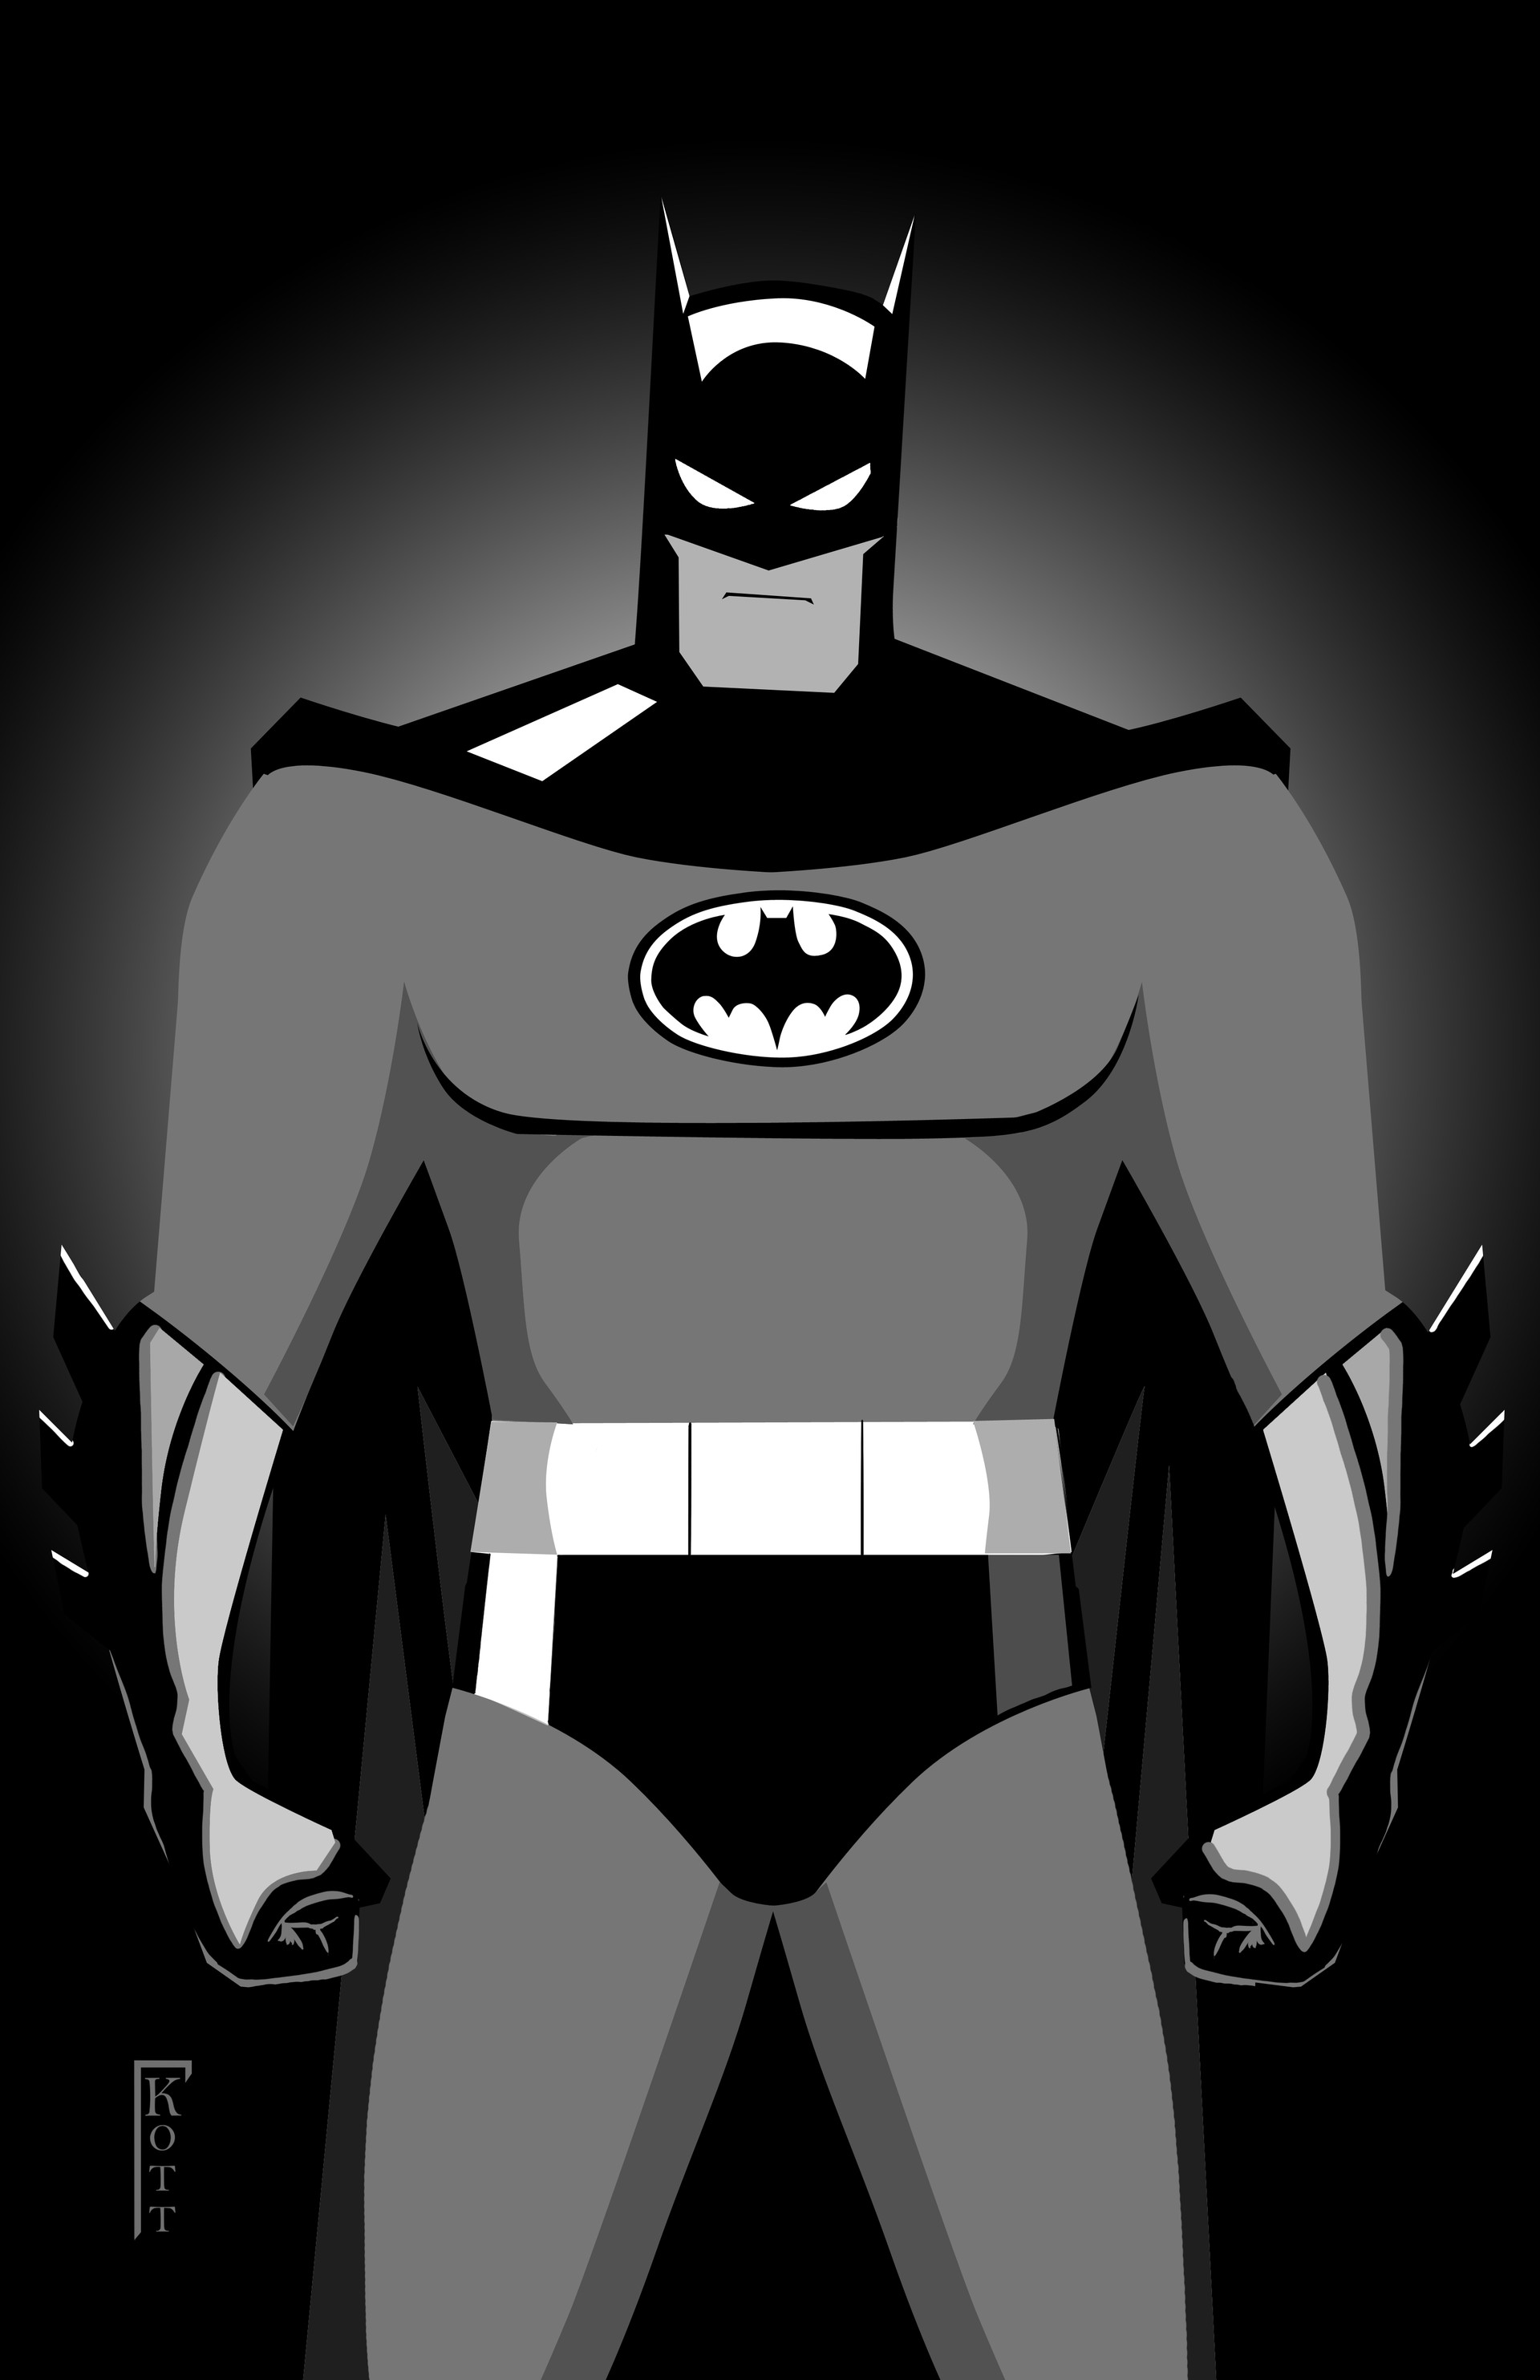 Cameron Kotterman - 90's Animated Series Batman